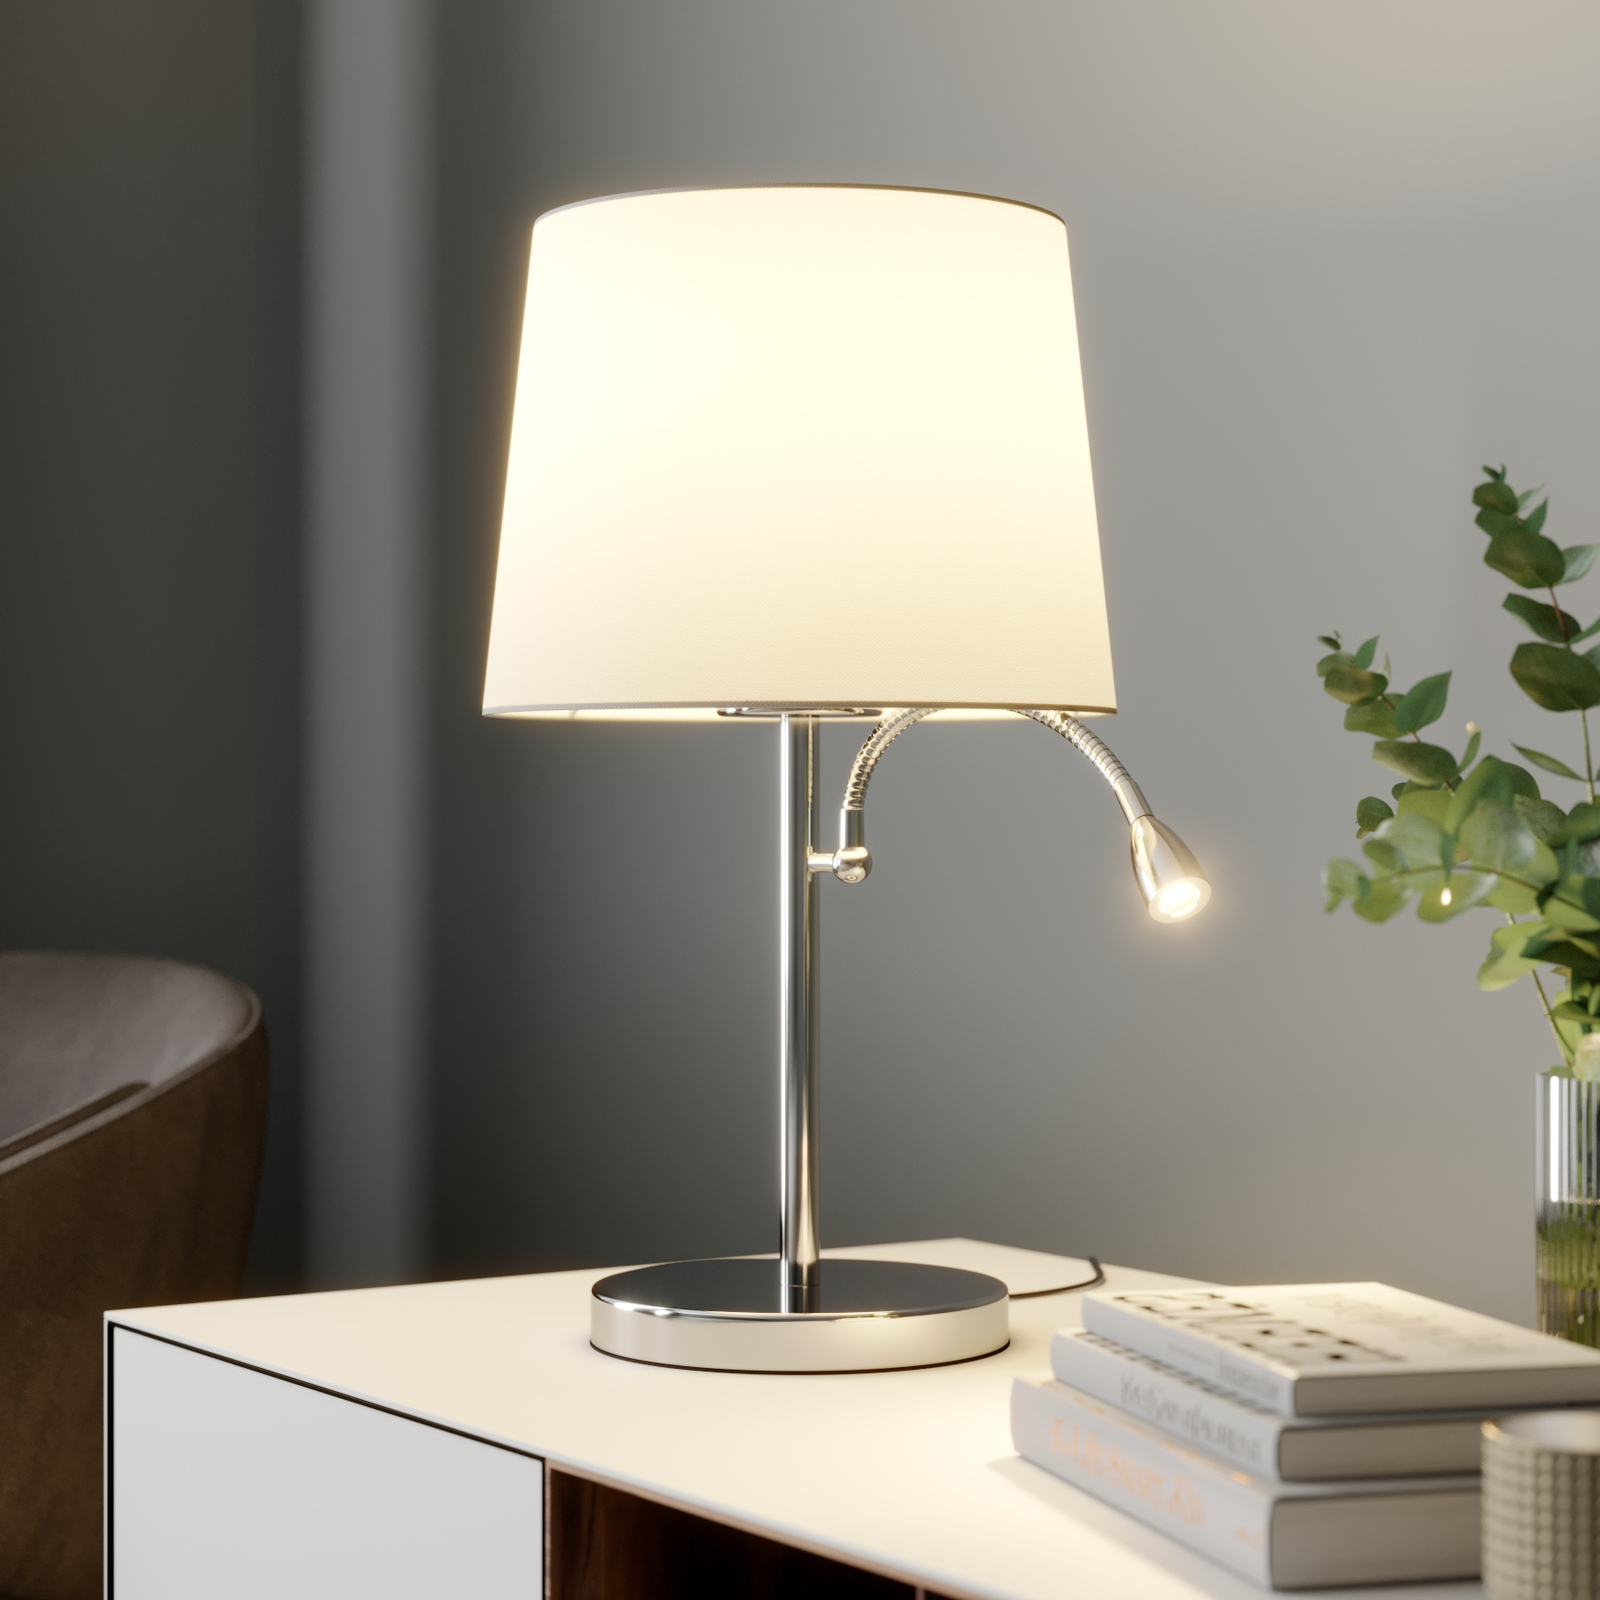 Tkaninowa lampa stołowa Benjiro z lampką LED